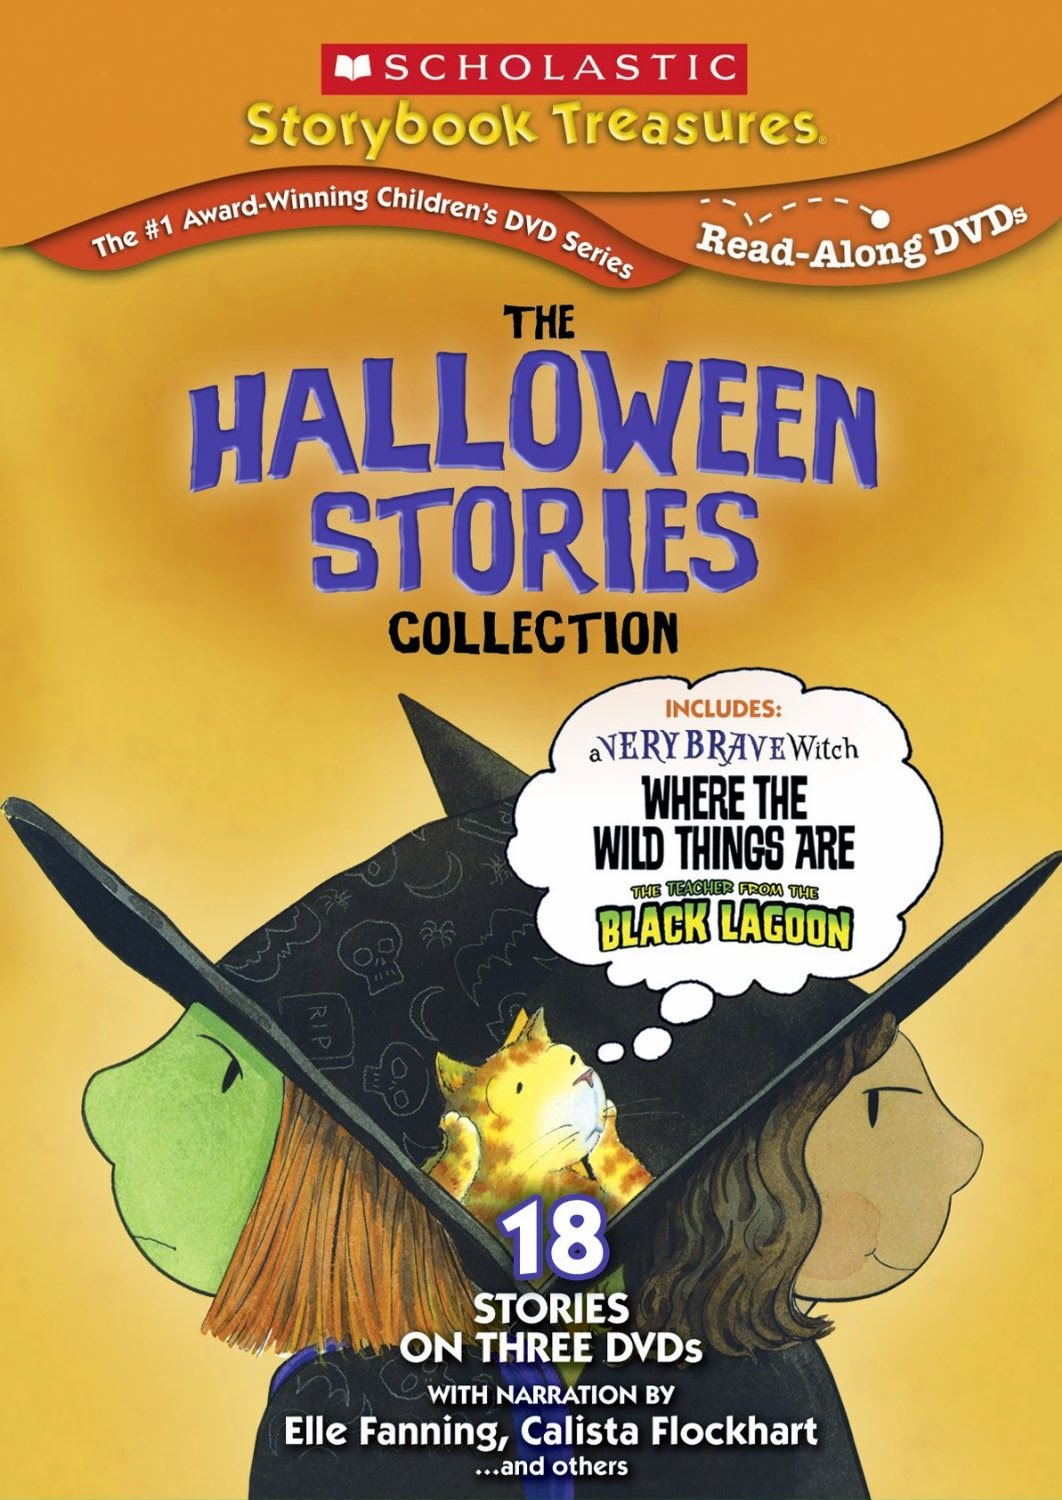 Scholastic Storybook Treasures used for Halloween Theme Week